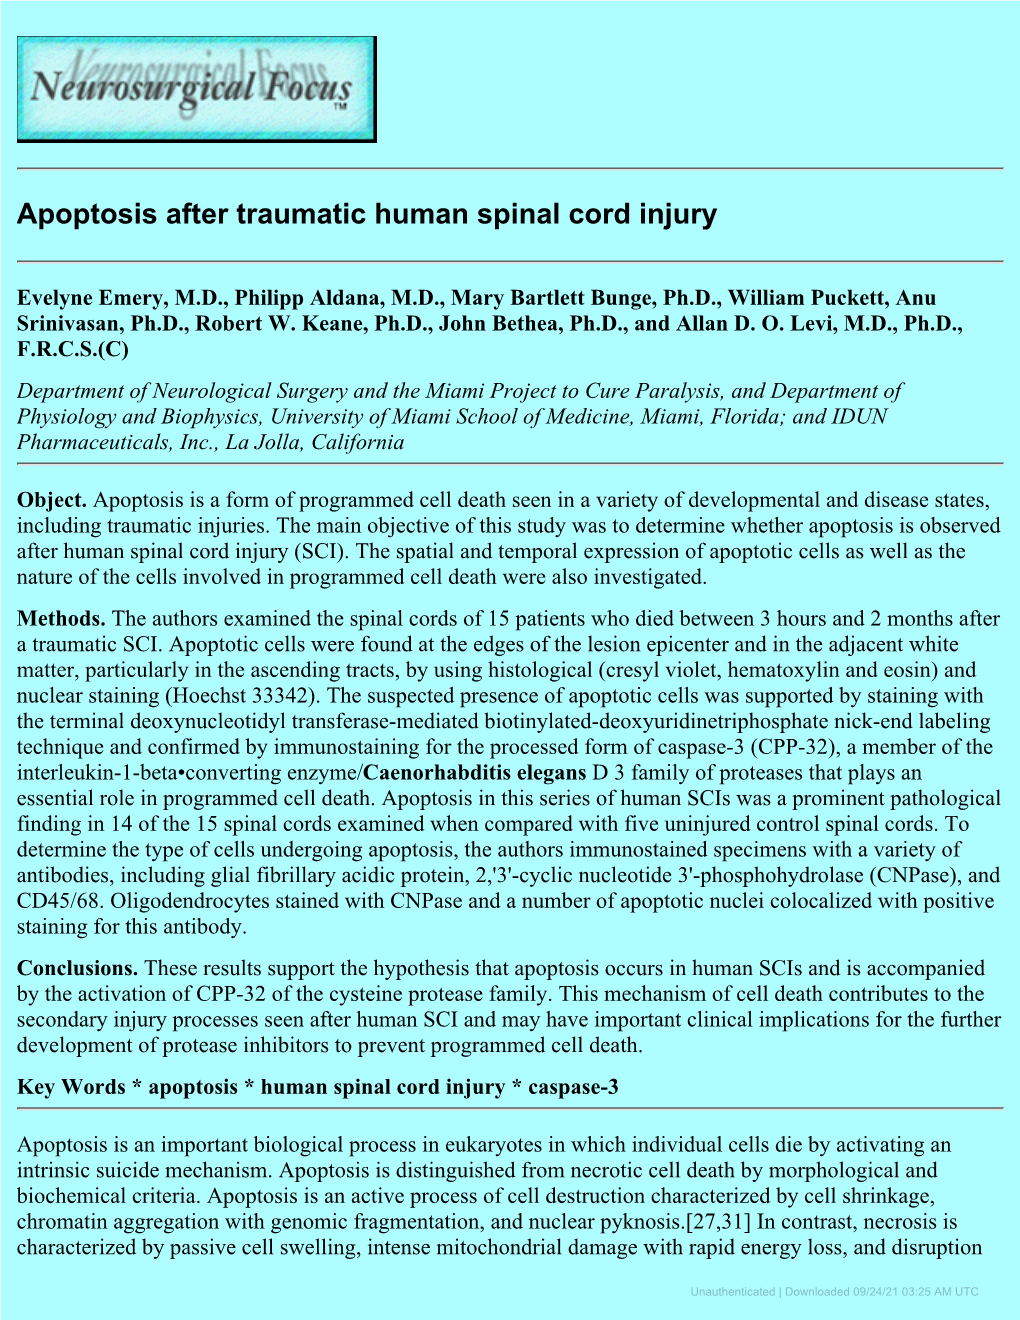 Apoptosis After Traumatic Human Spinal Cord Injury